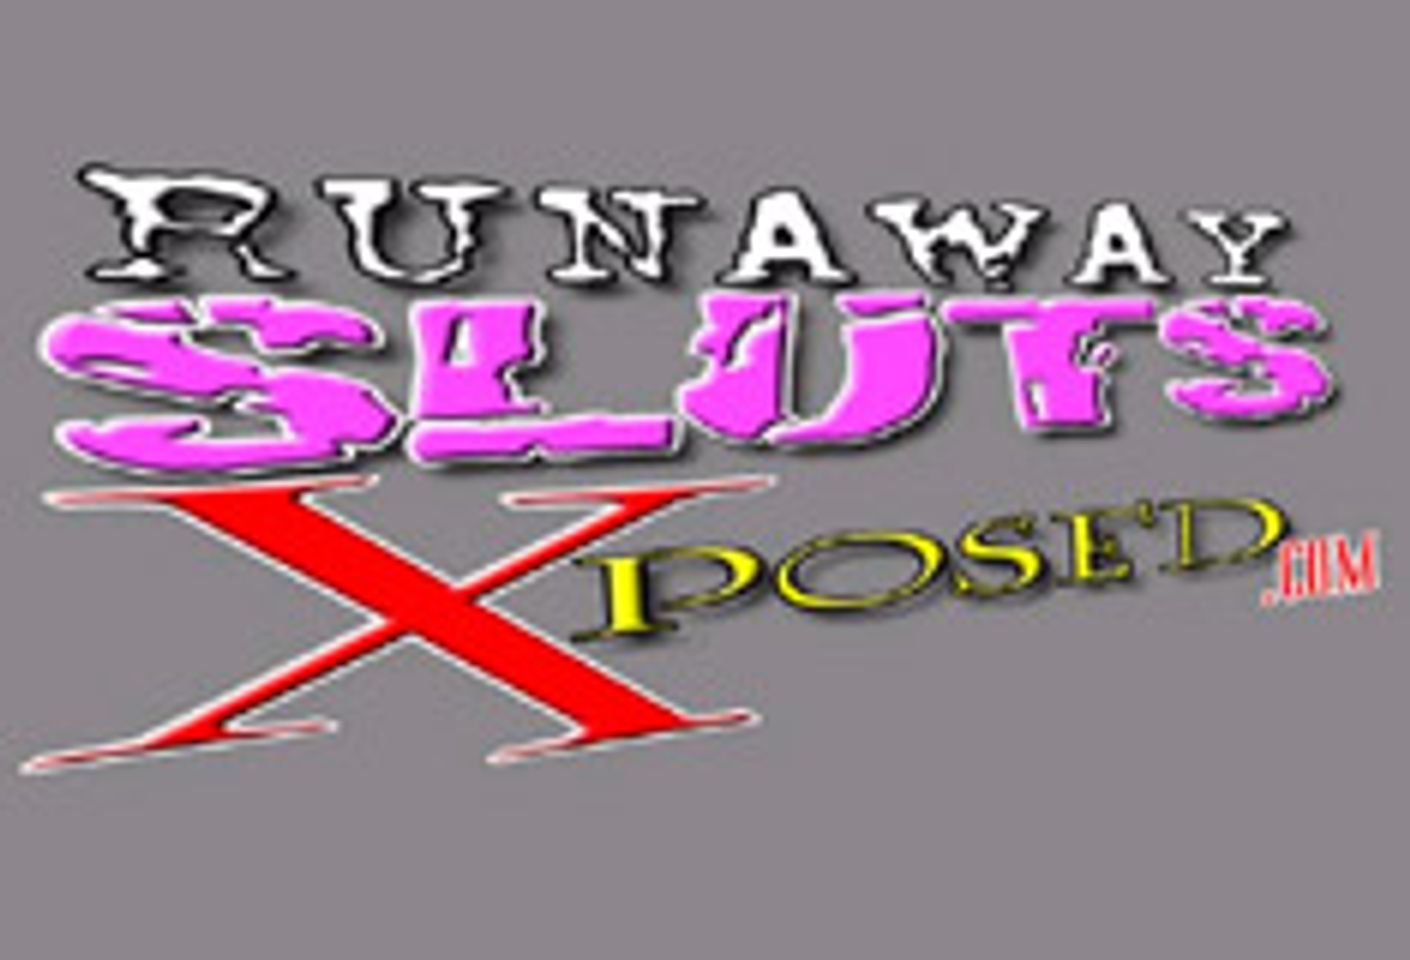 RunawaySlutsXposed.com Launched by MadeinMeXXXico.com Parent